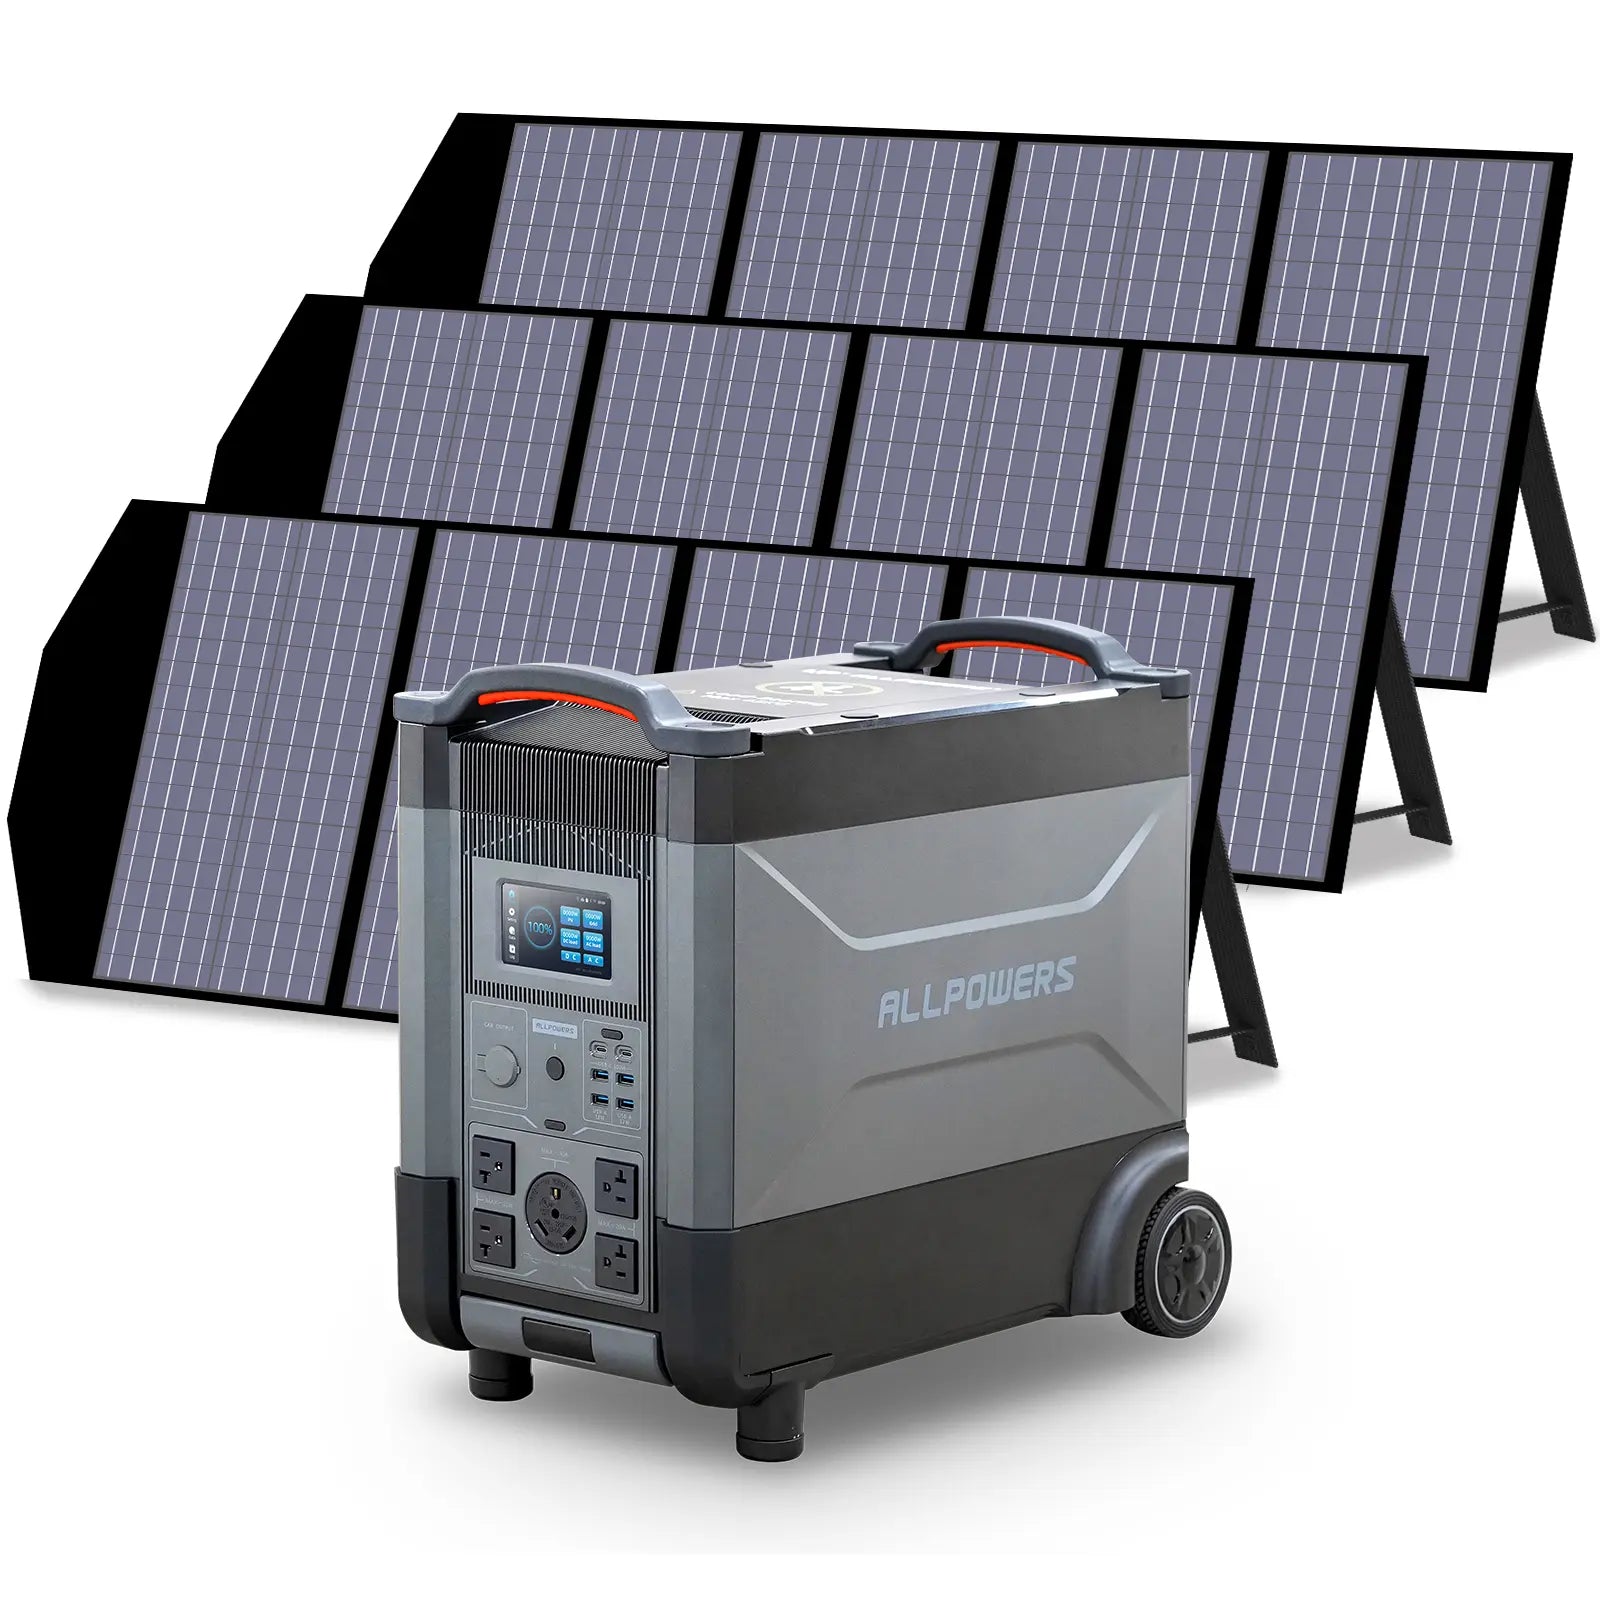 ALLPOWERS Solar Generator Kit 3600W (R4000 + SP029 140W Solar Panel)